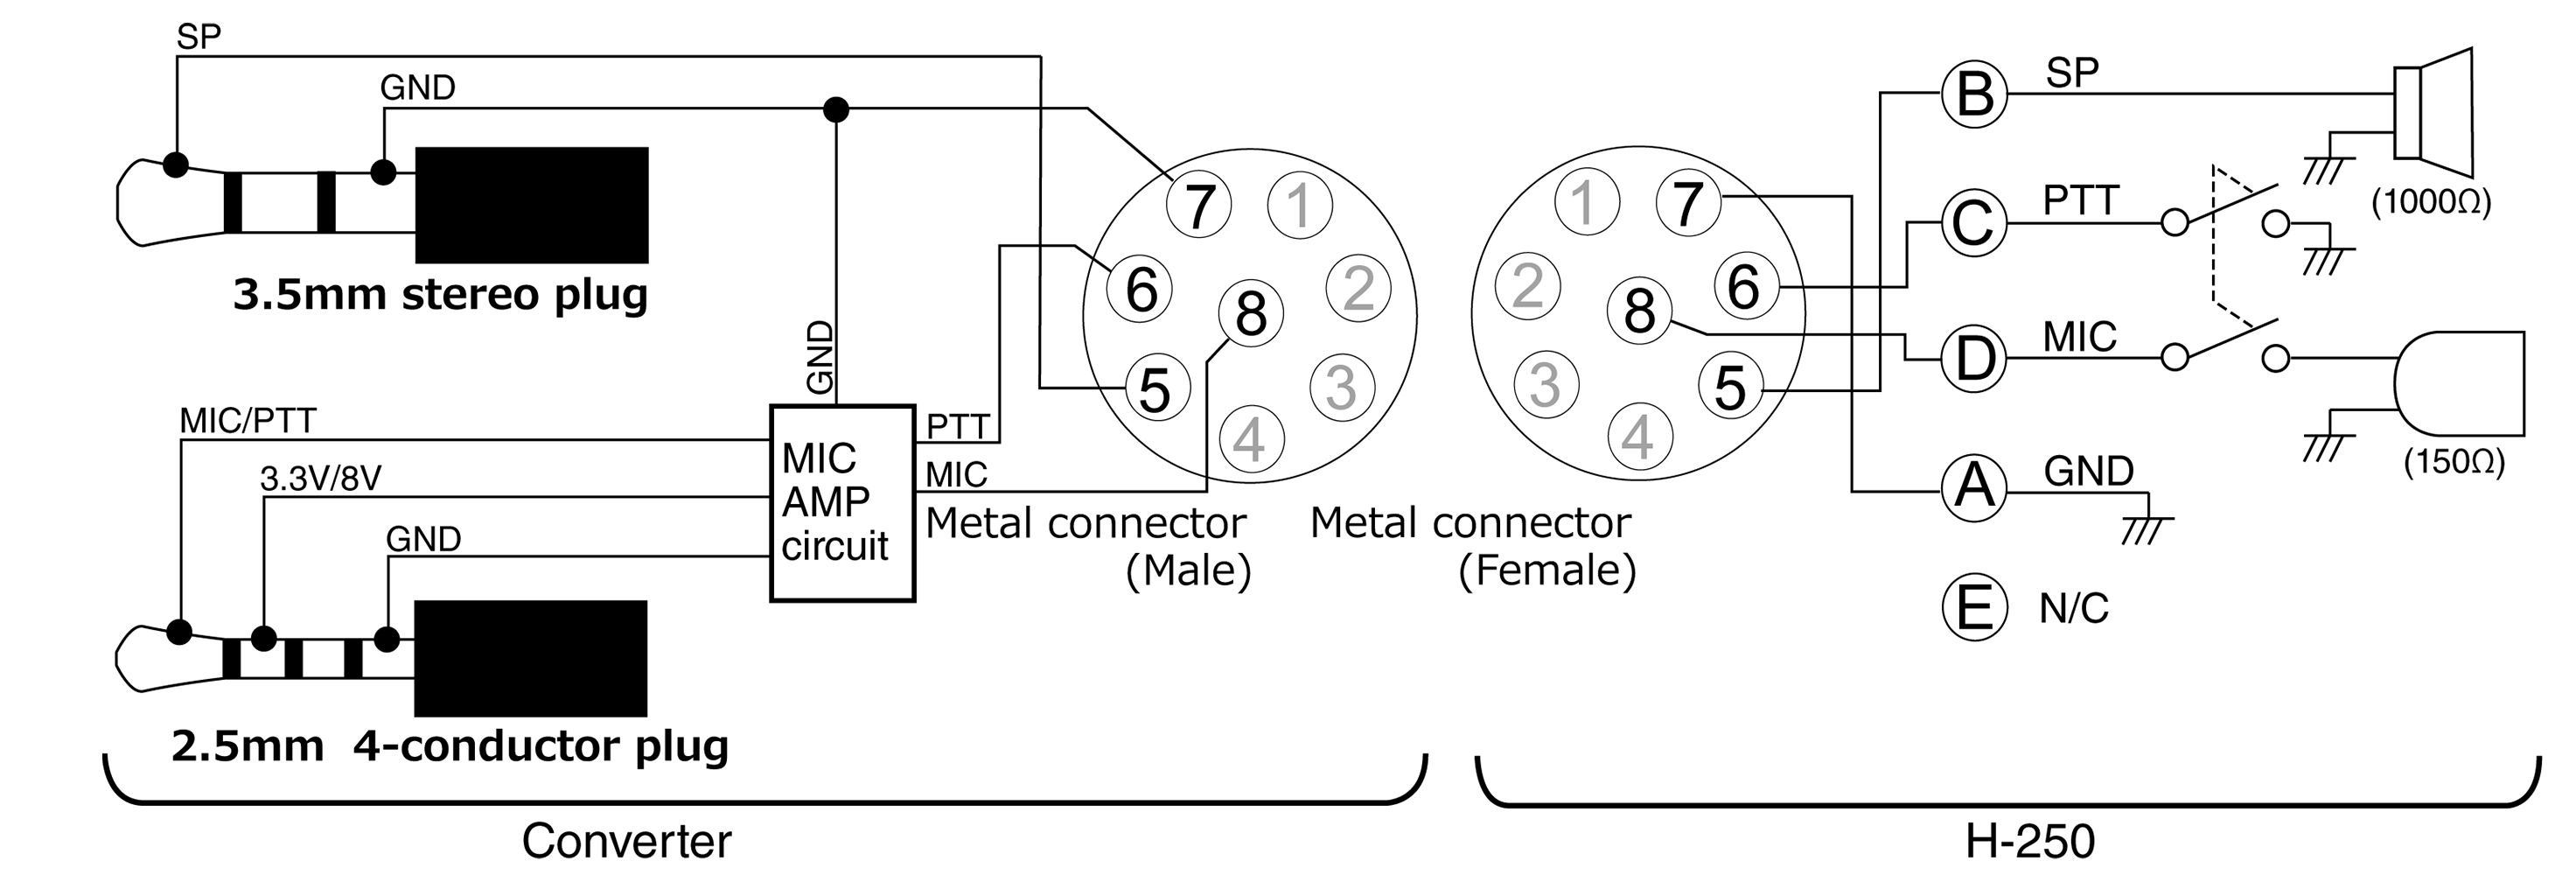 universal relay wiring diagram